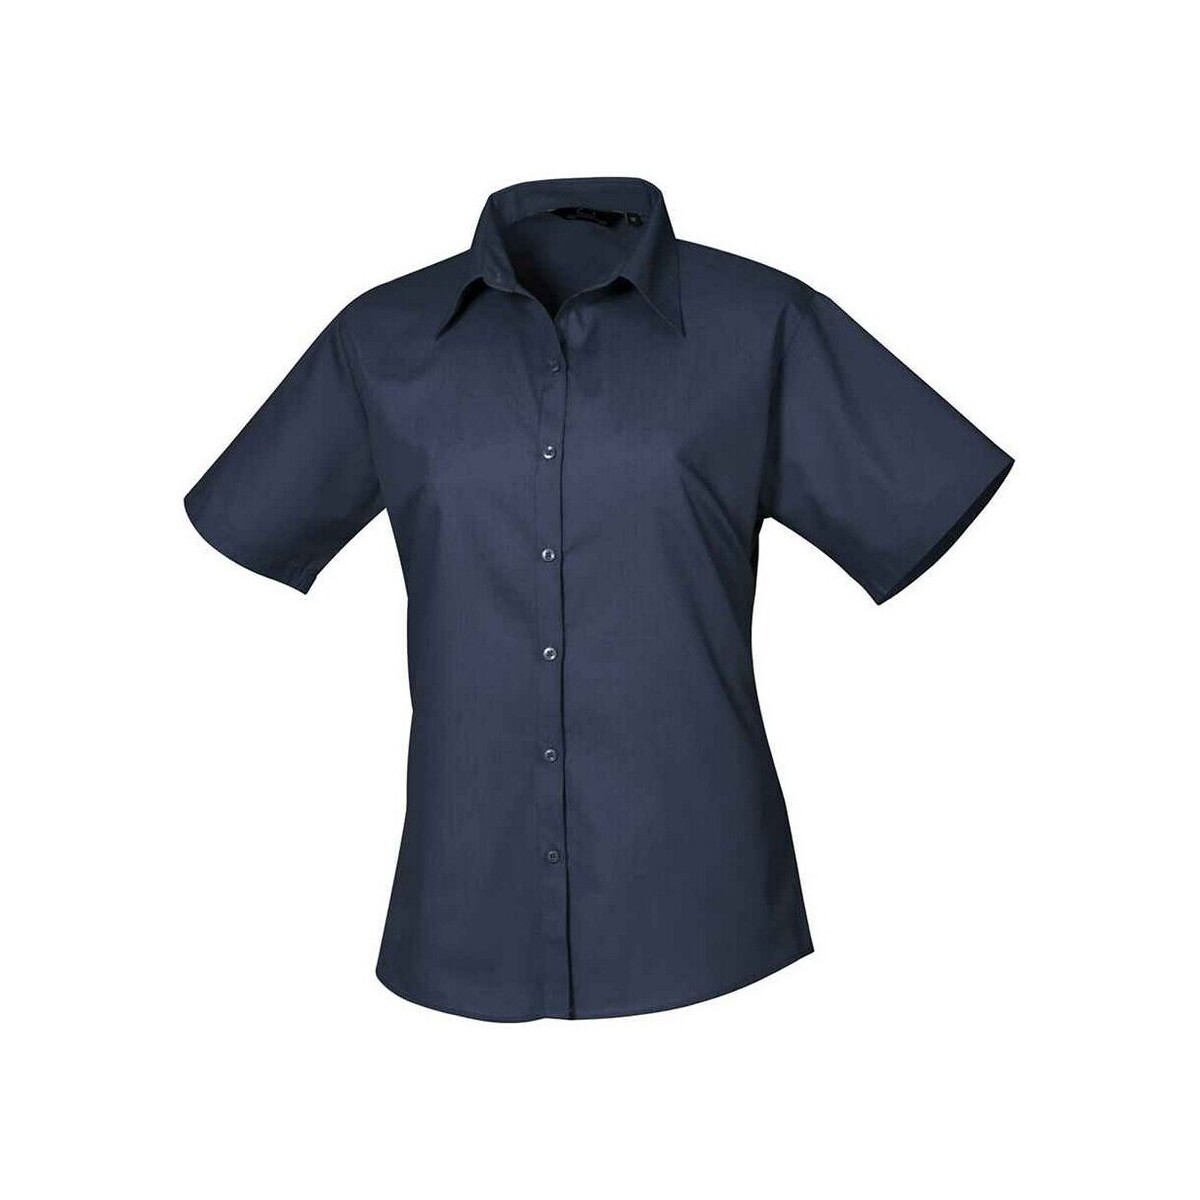 textil Mujer Camisas Premier PR302 Azul